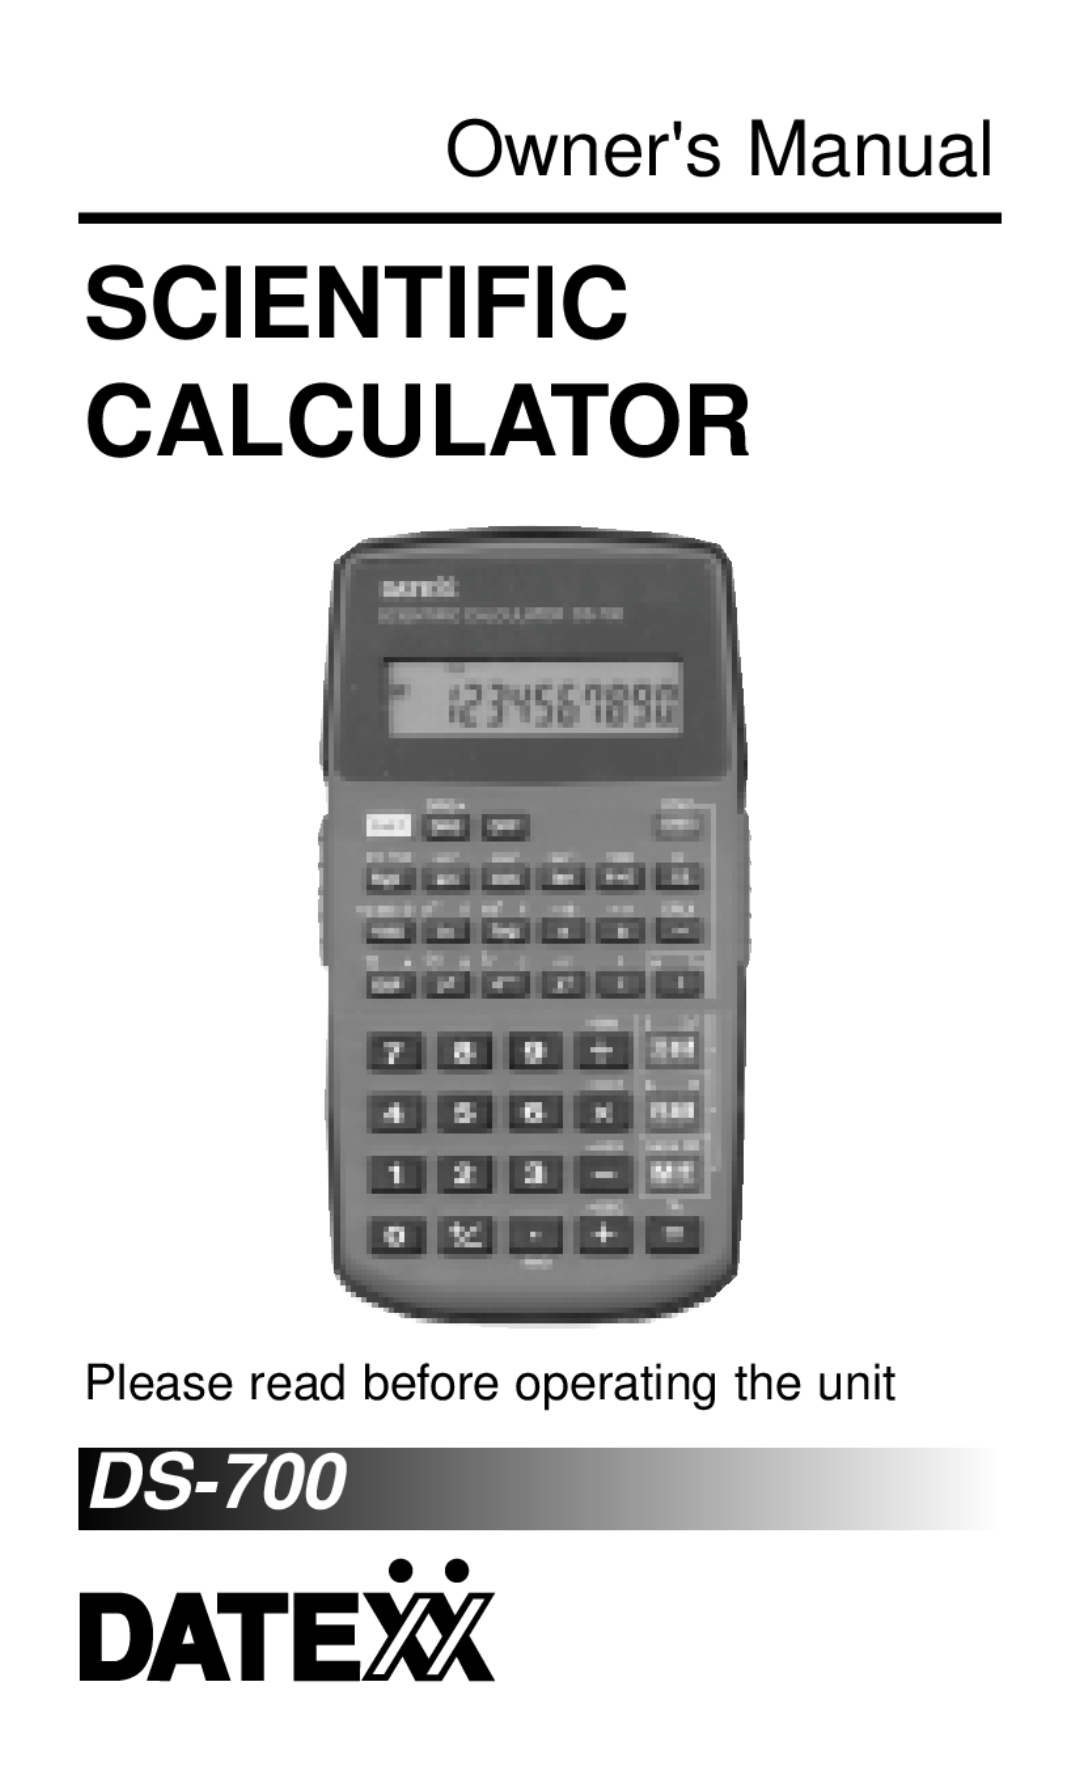 Datexx DS-700 owner manual Scientific Calculator, Owners Manual 